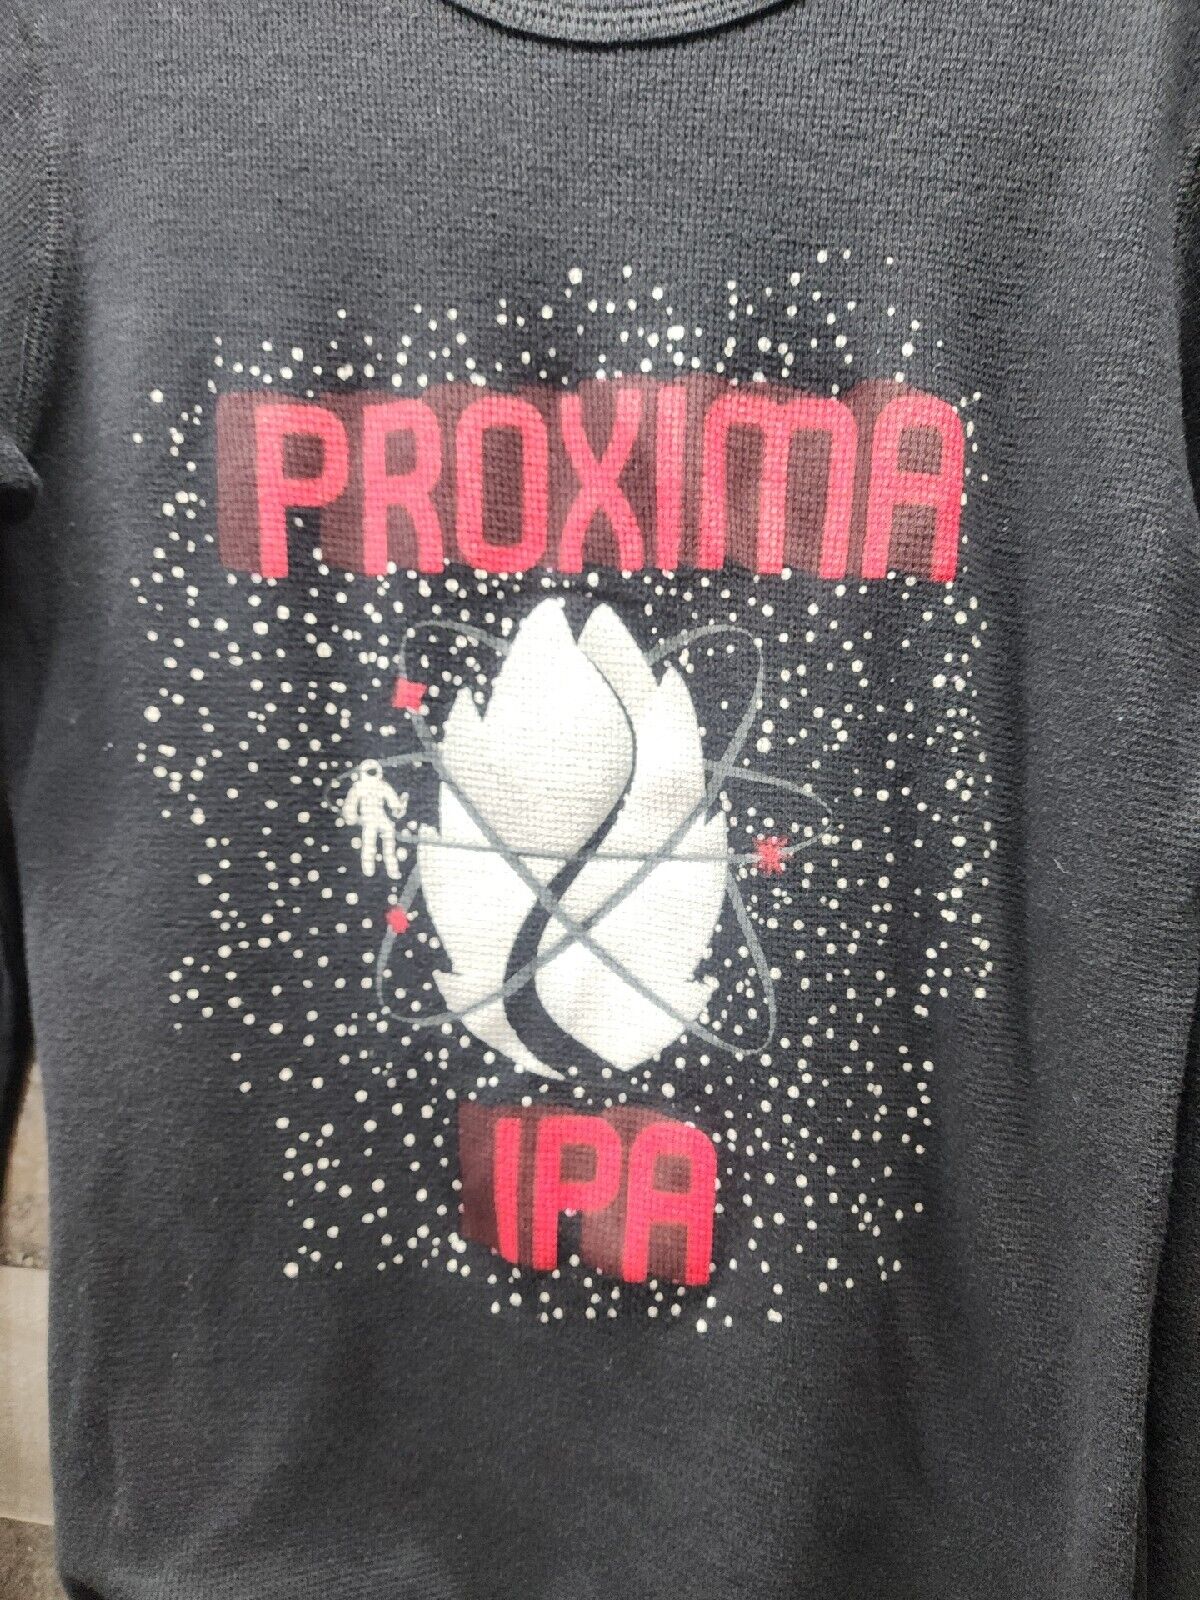 Proxima IPA Hop Valley Black Longsleeve Thermal S… - image 2